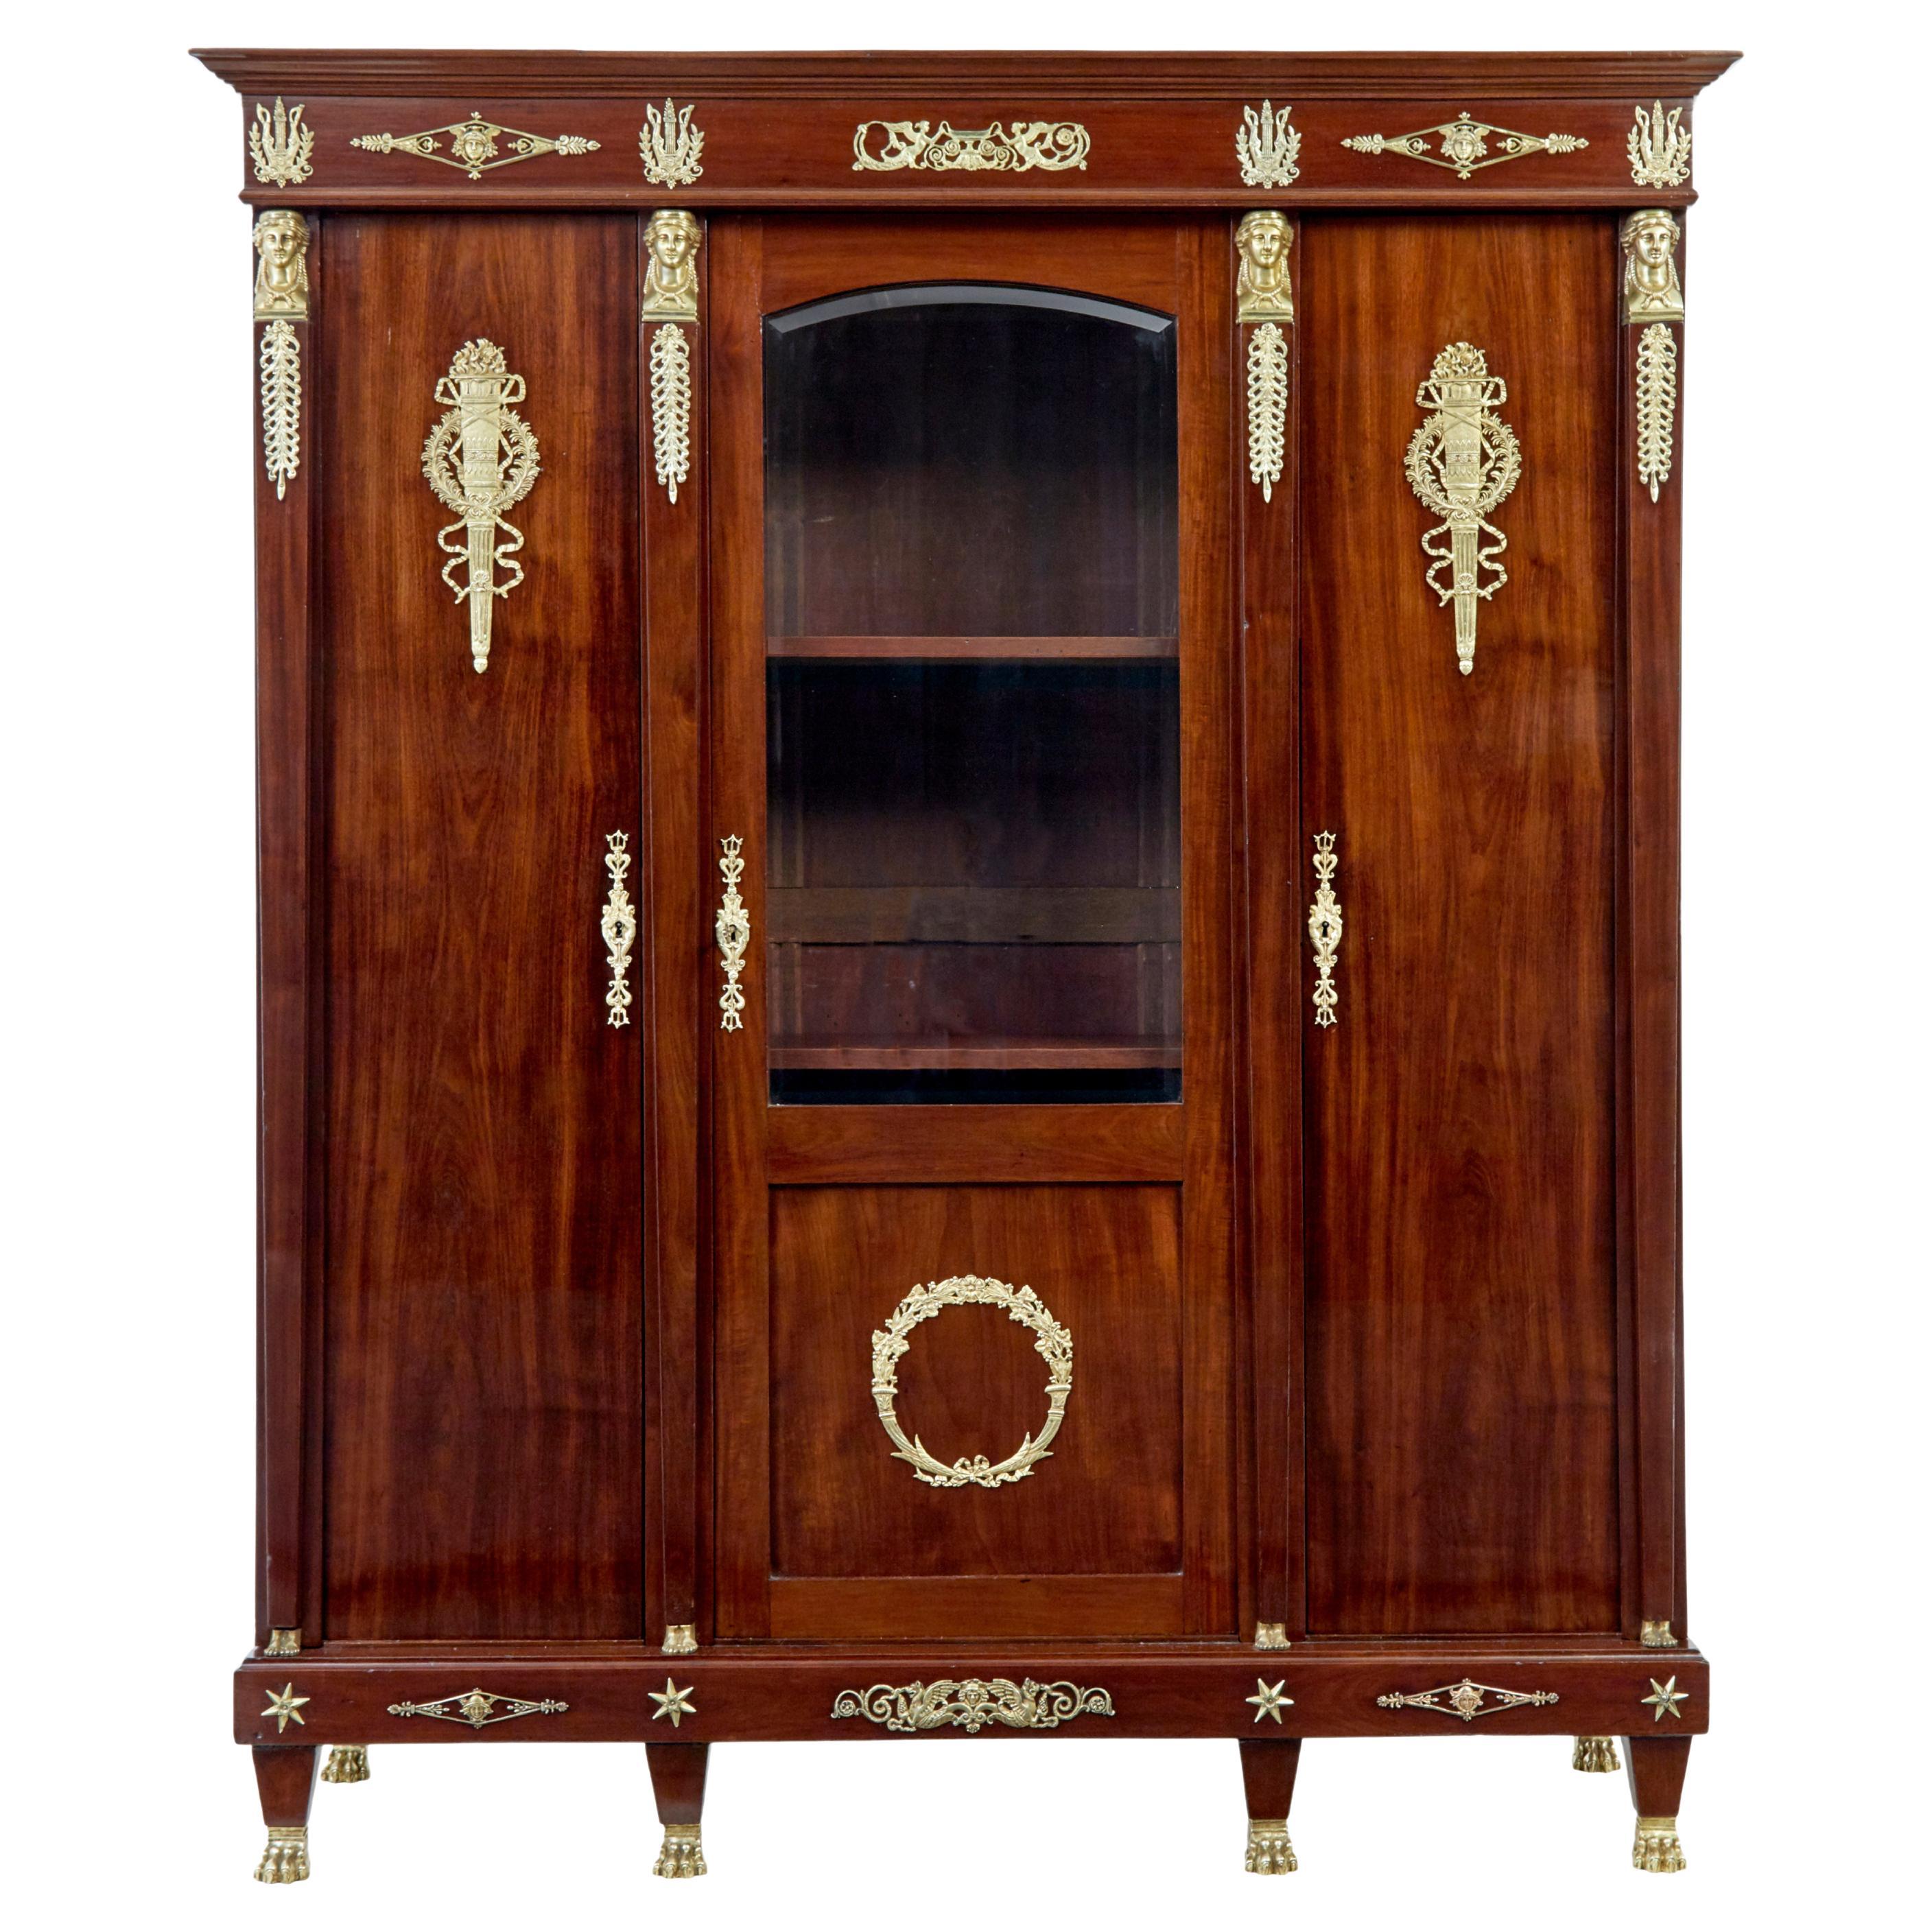 Late 19th century French empire mahogany and ormolu cabinet